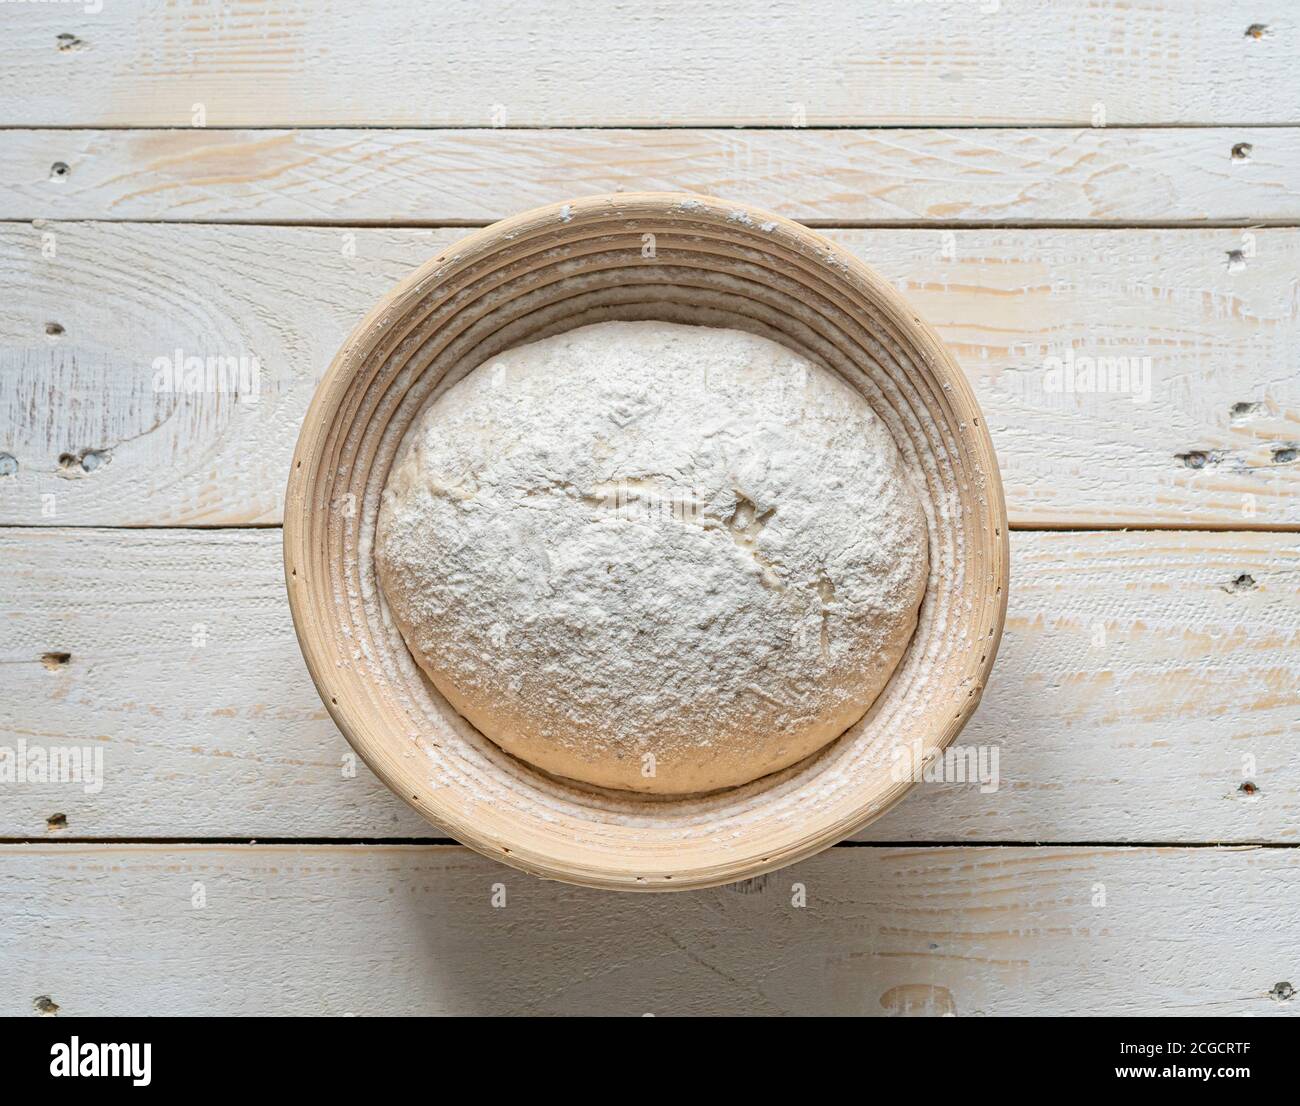 Sourdough bread dough in wicker banneton proving basket on wooden background Stock Photo